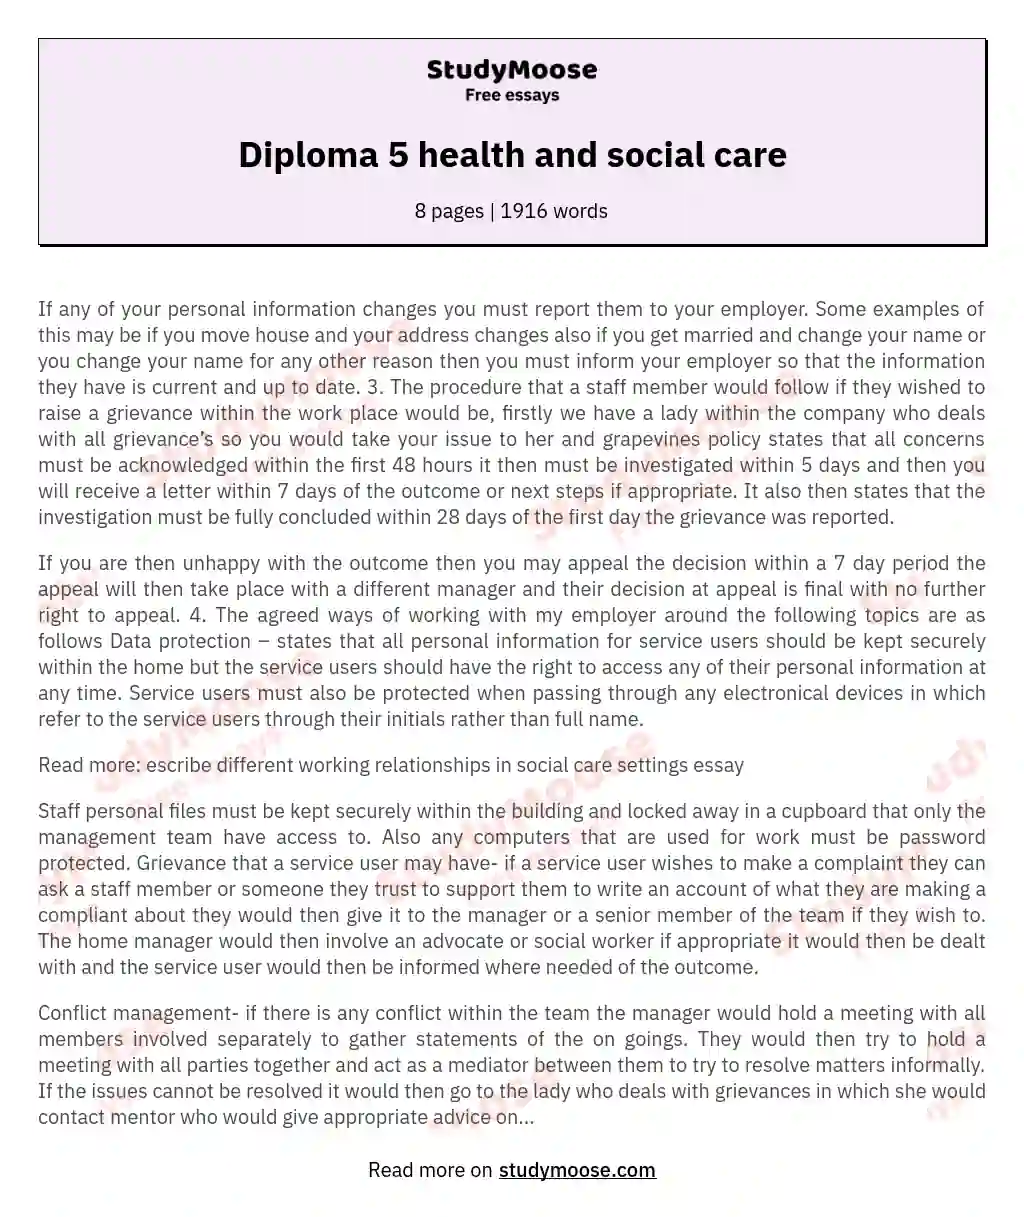 Diploma 5 health and social care essay